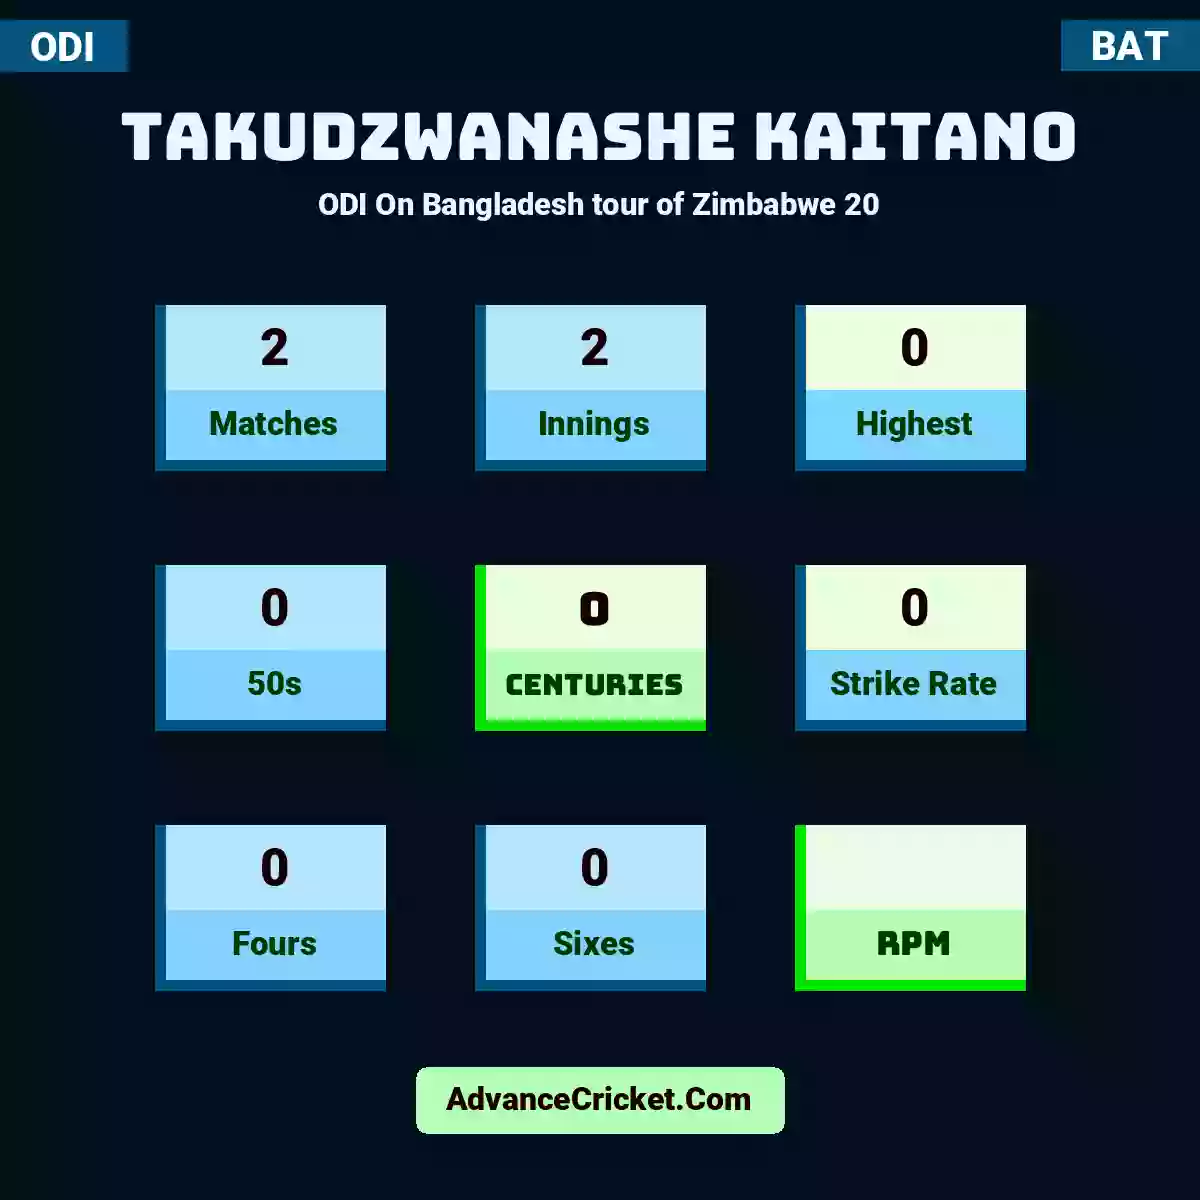 Takudzwanashe Kaitano ODI  On Bangladesh tour of Zimbabwe 20, Takudzwanashe Kaitano played 2 matches, scored 0 runs as highest, 0 half-centuries, and 0 centuries, with a strike rate of 0. T.Kaitano hit 0 fours and 0 sixes.